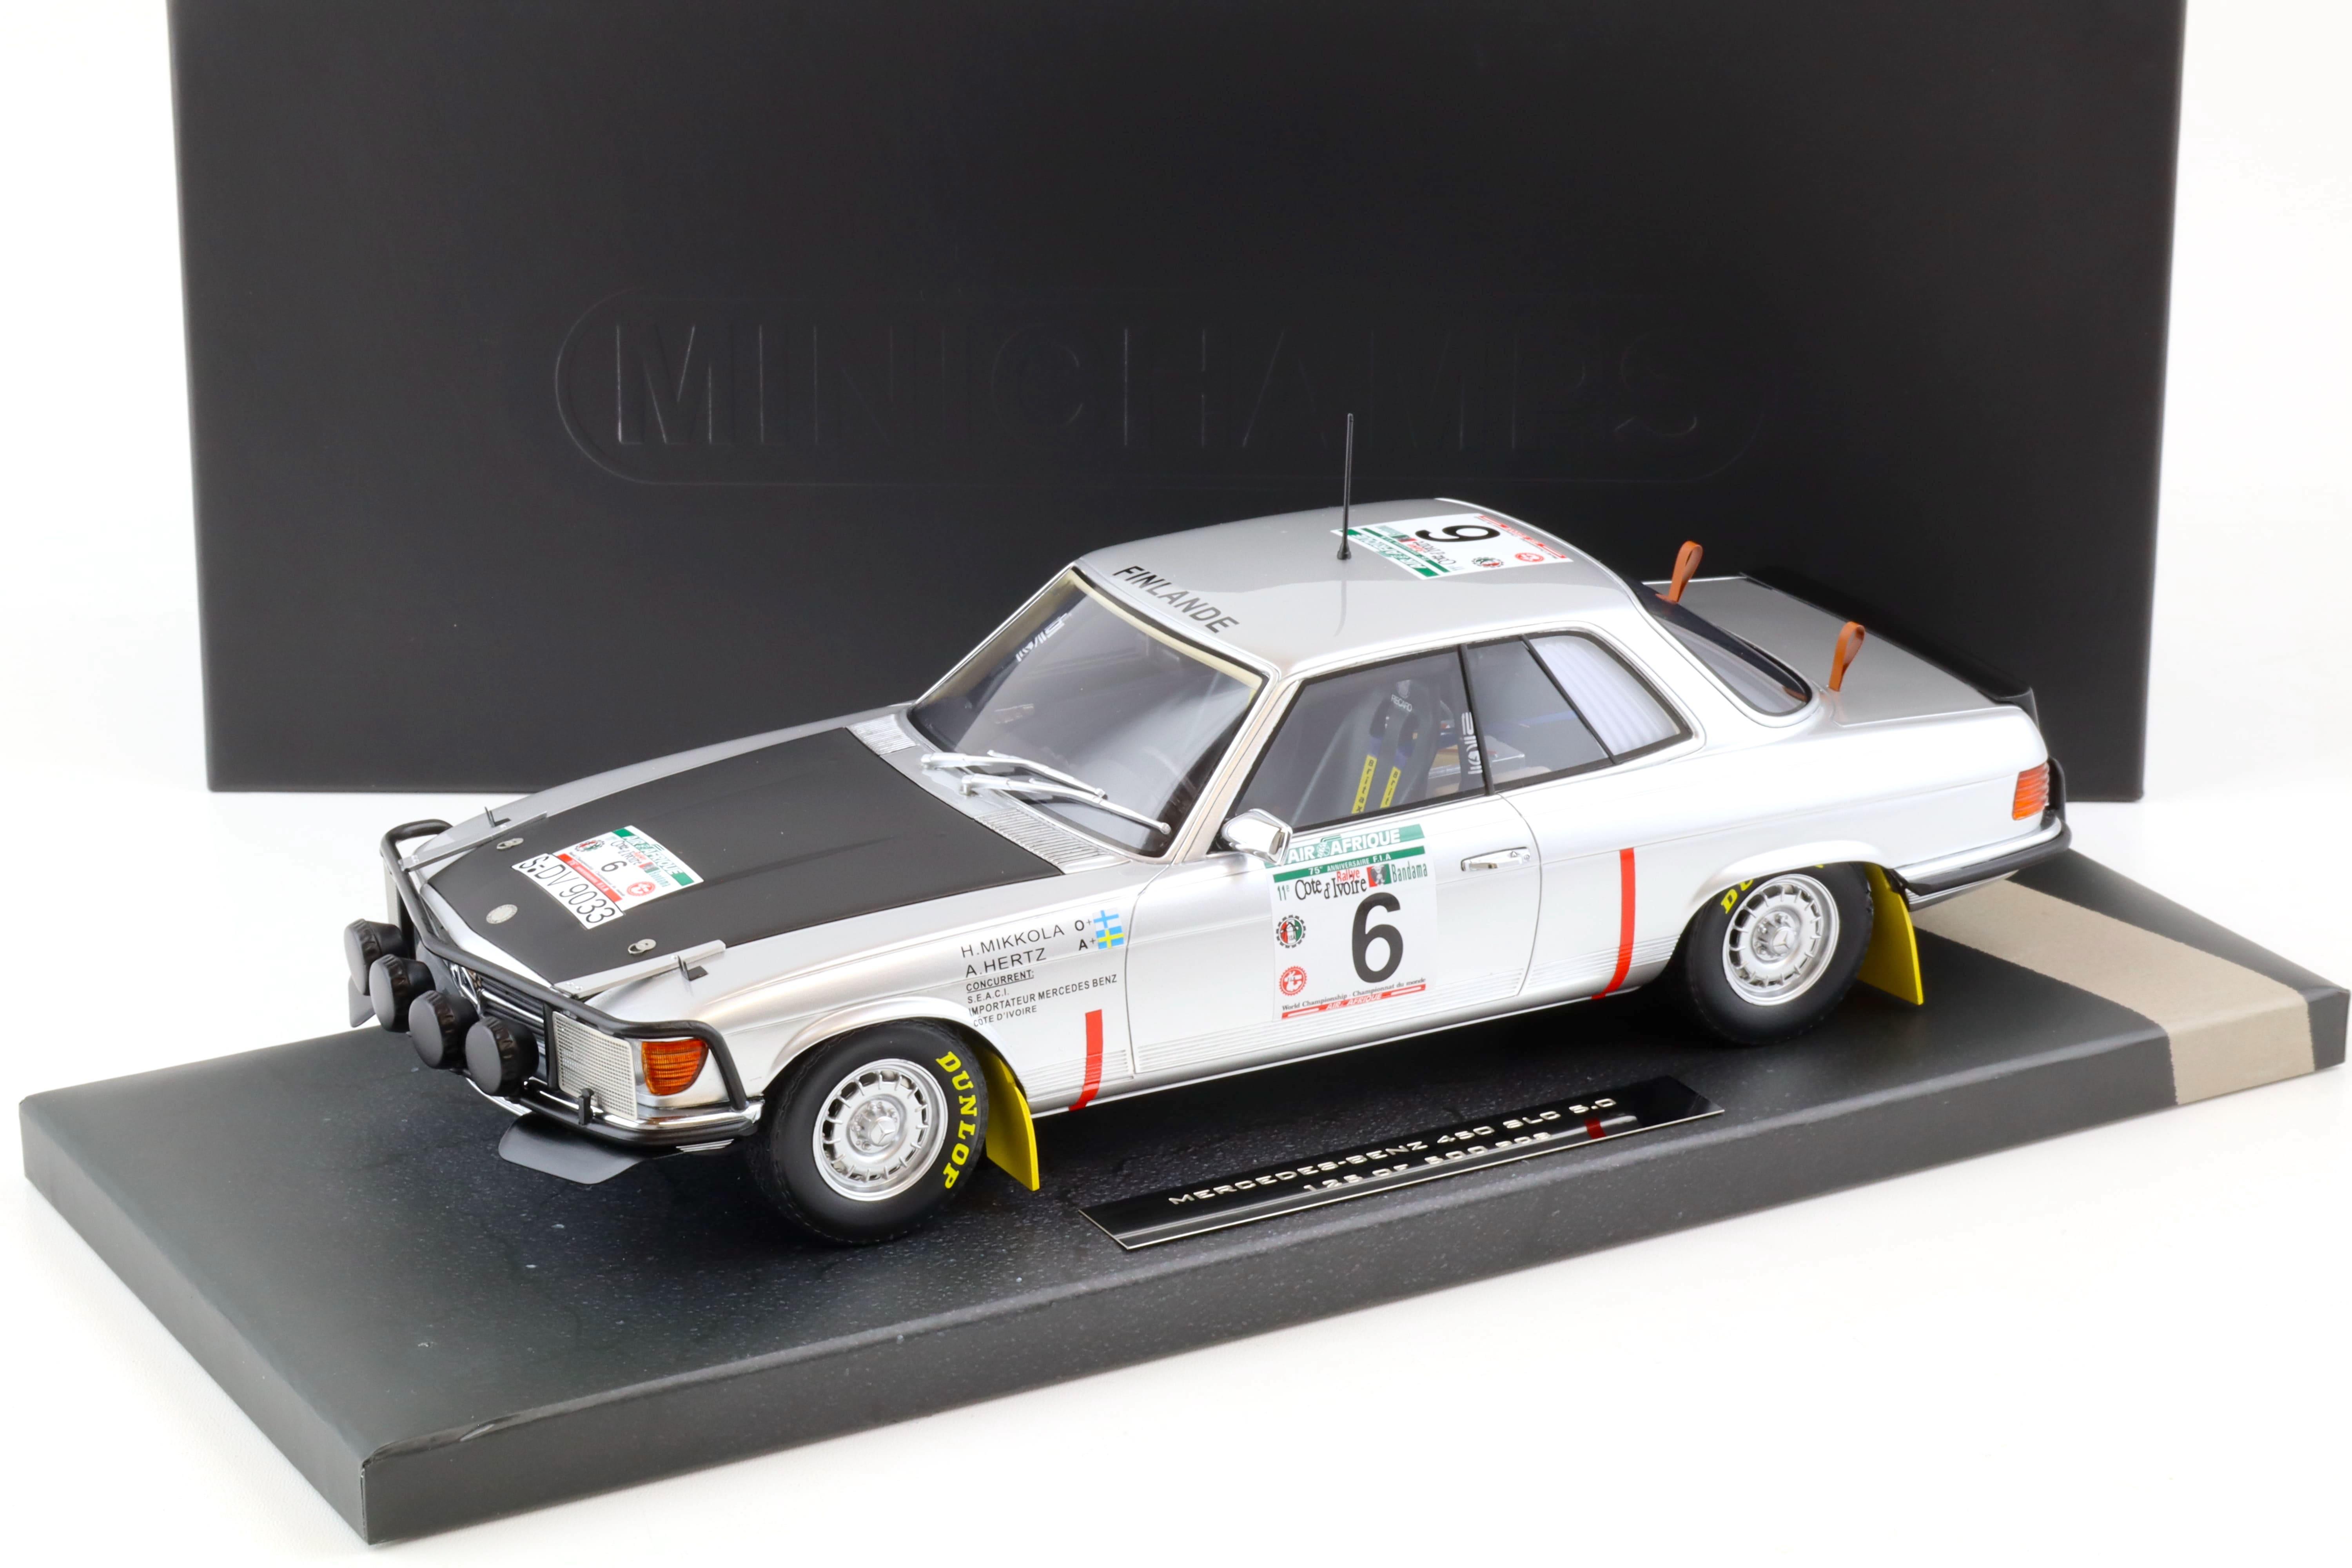 1:18 Minichamps Mercedes 450 SLC 5.0 Winner Mikkola / Hertz #6 Rally Bandama 1979